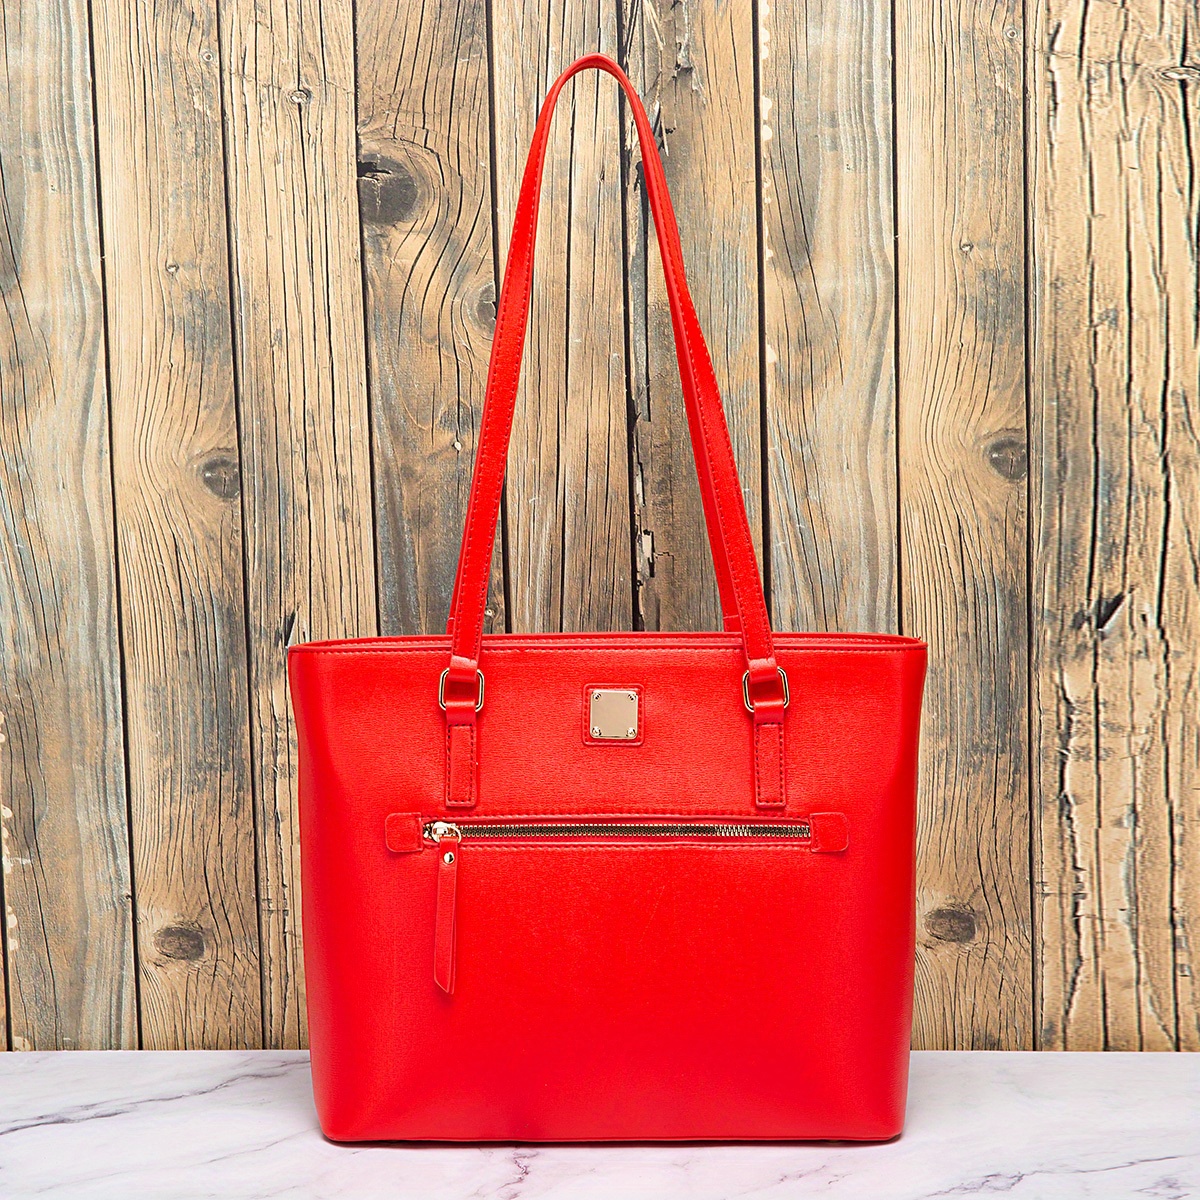  Dooney & Bourke Handbag, Saffiano Shopper Tote - Pale